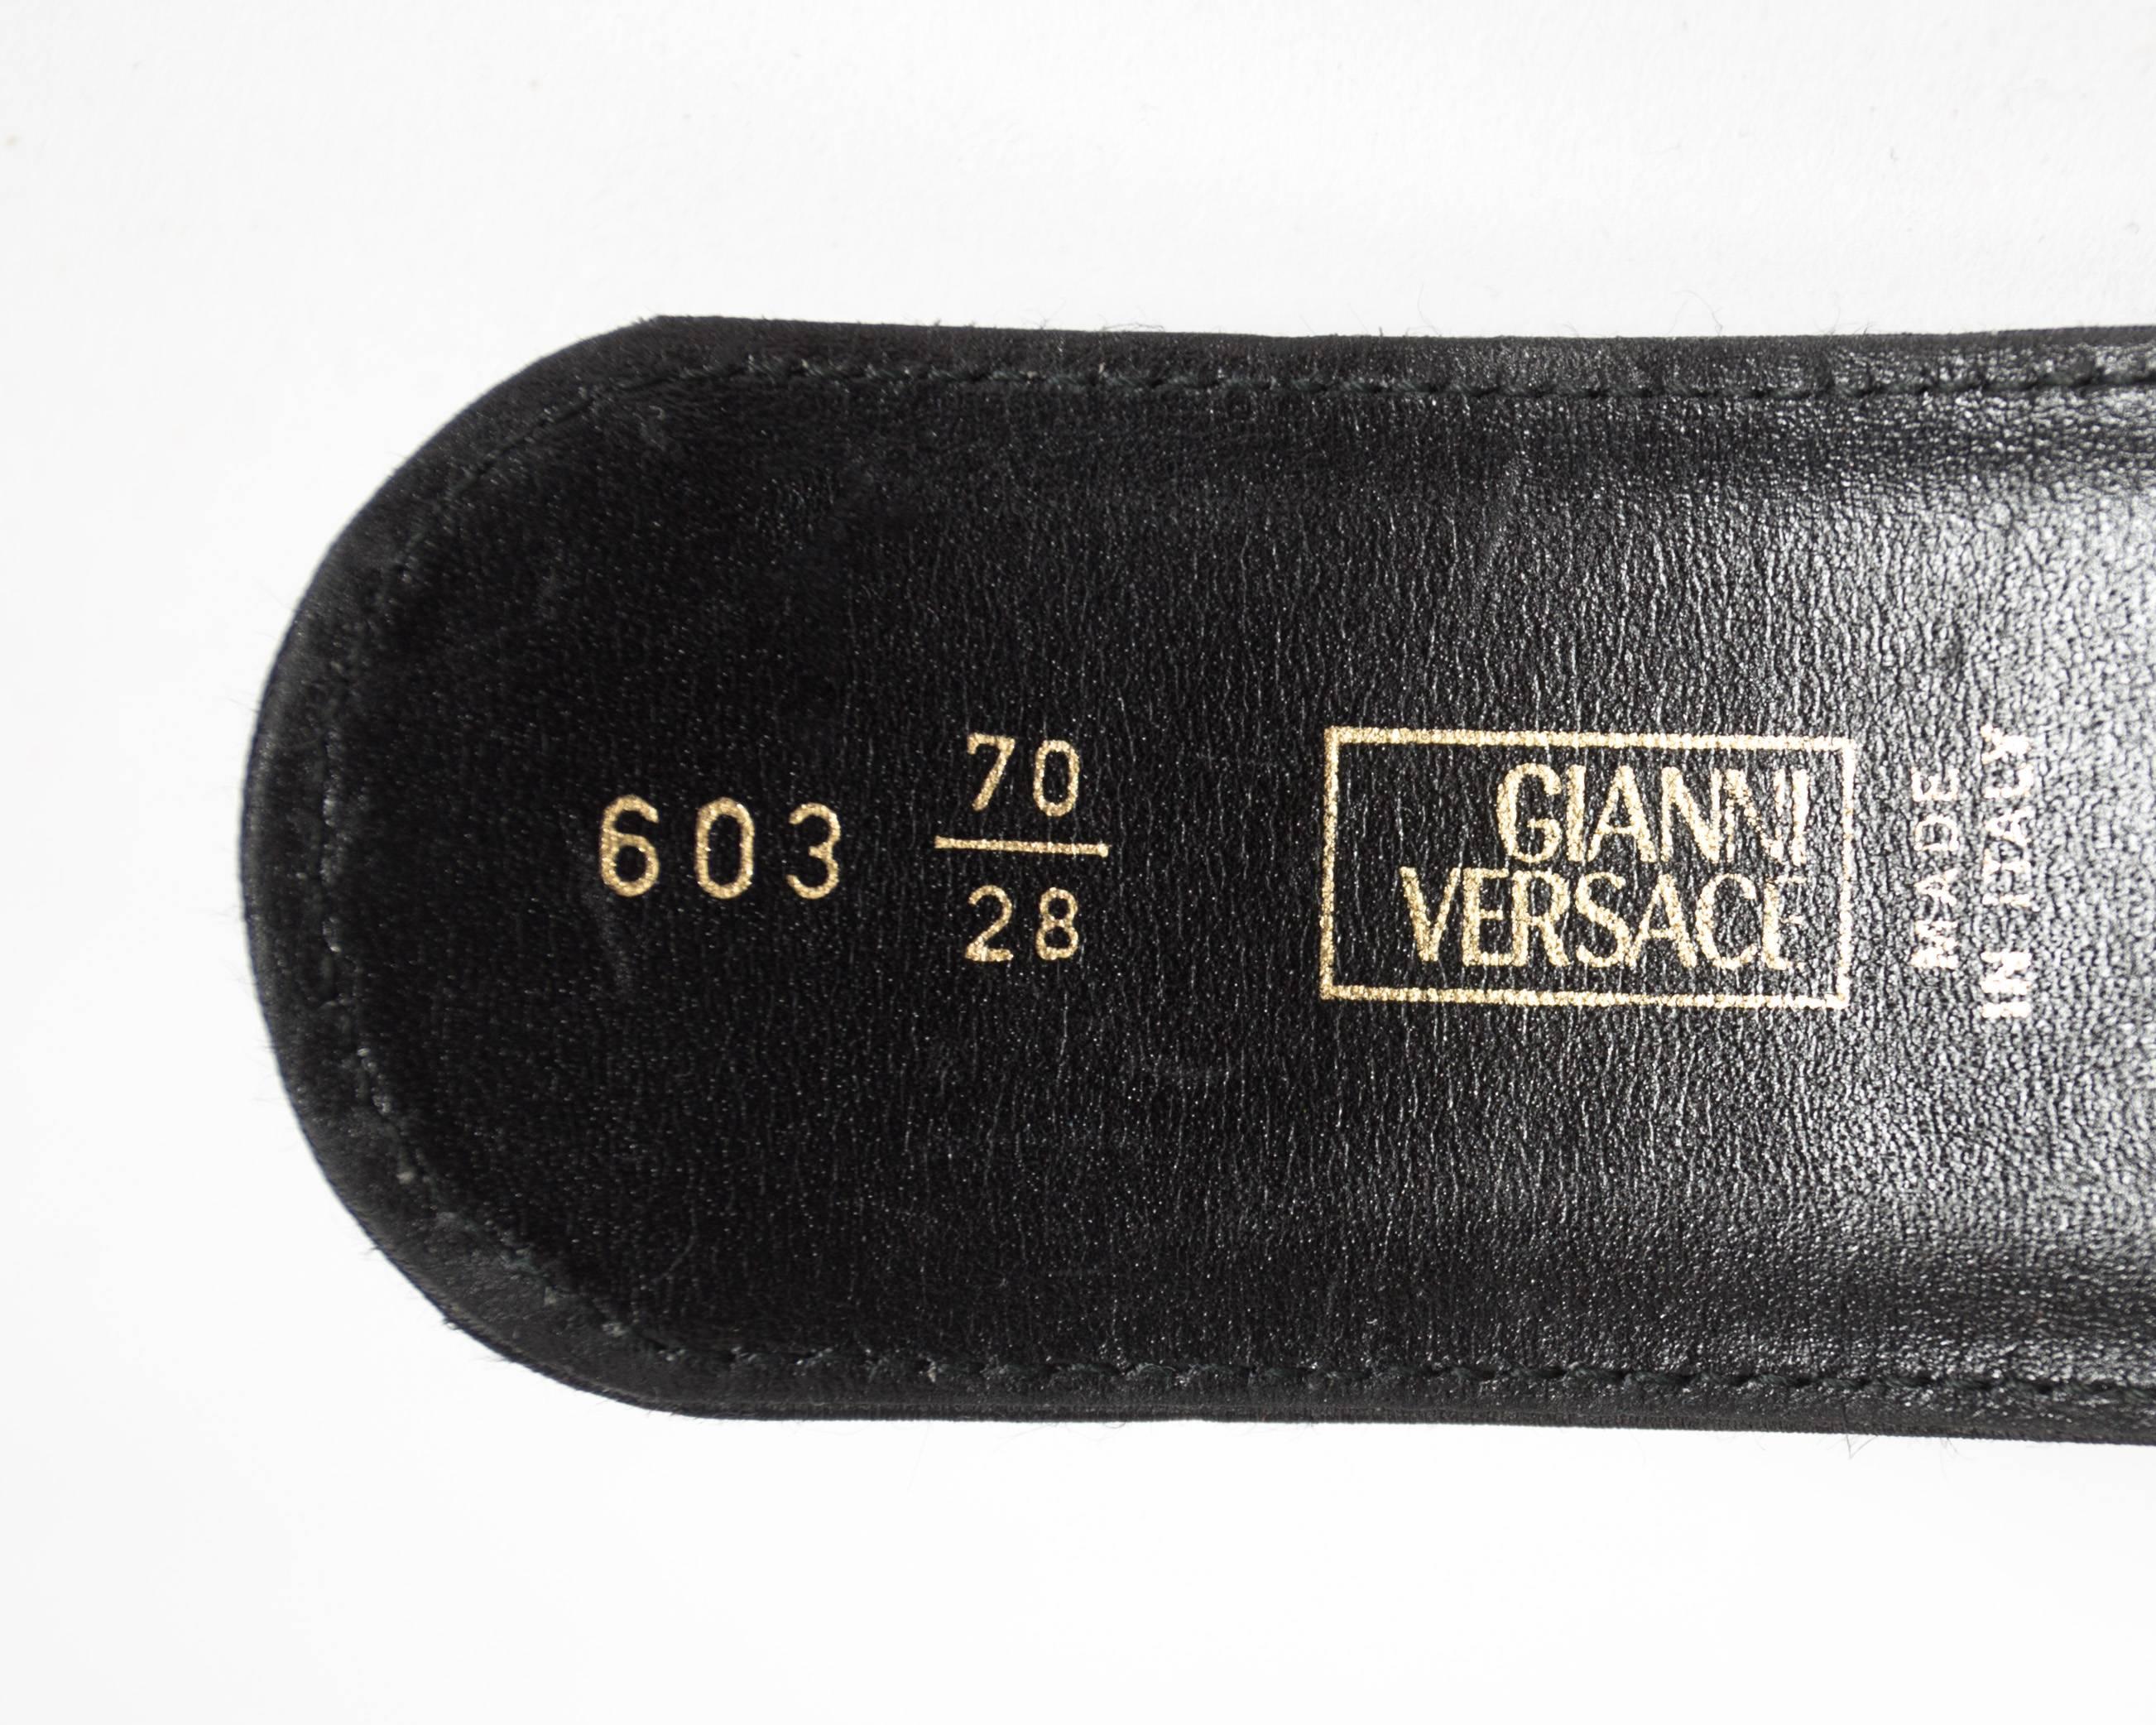 Women's Gianni Versace black and gold Medusa belt, circa 1990s